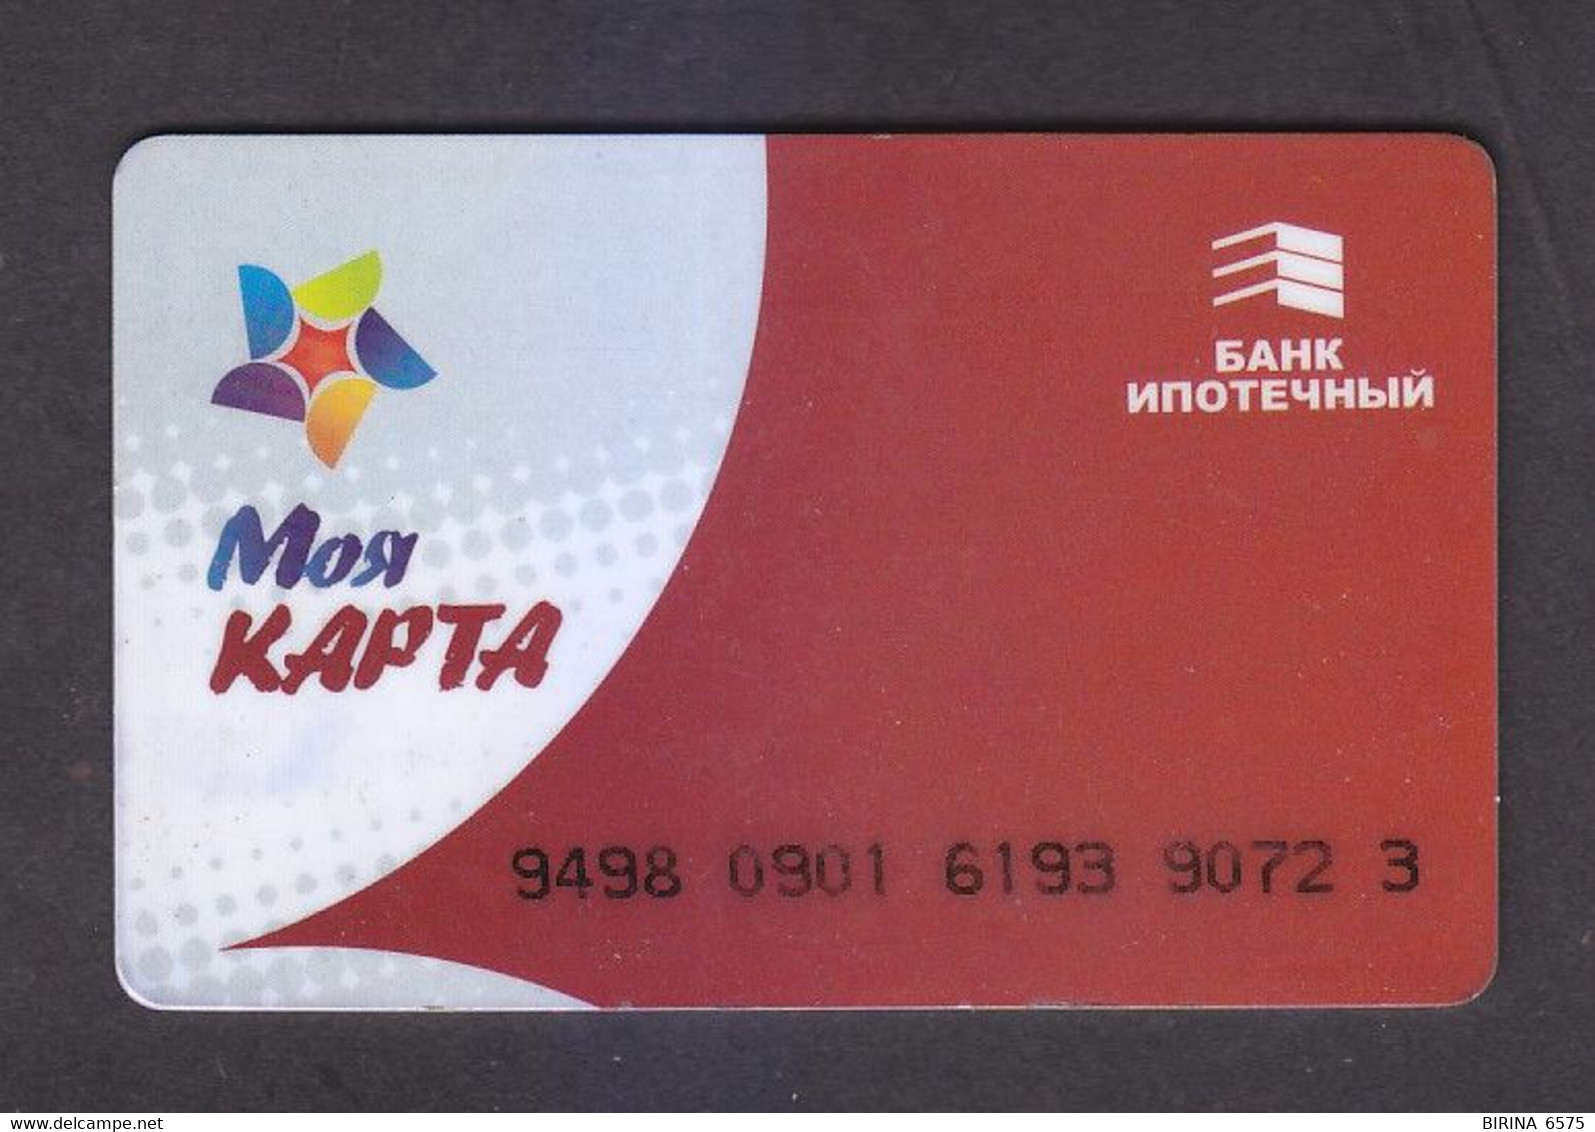 BANK CARD. IPOTECHNYIY BANK. MOLDOVA. TRANSNISTRIA. 2015. - 1-2 - Moldova